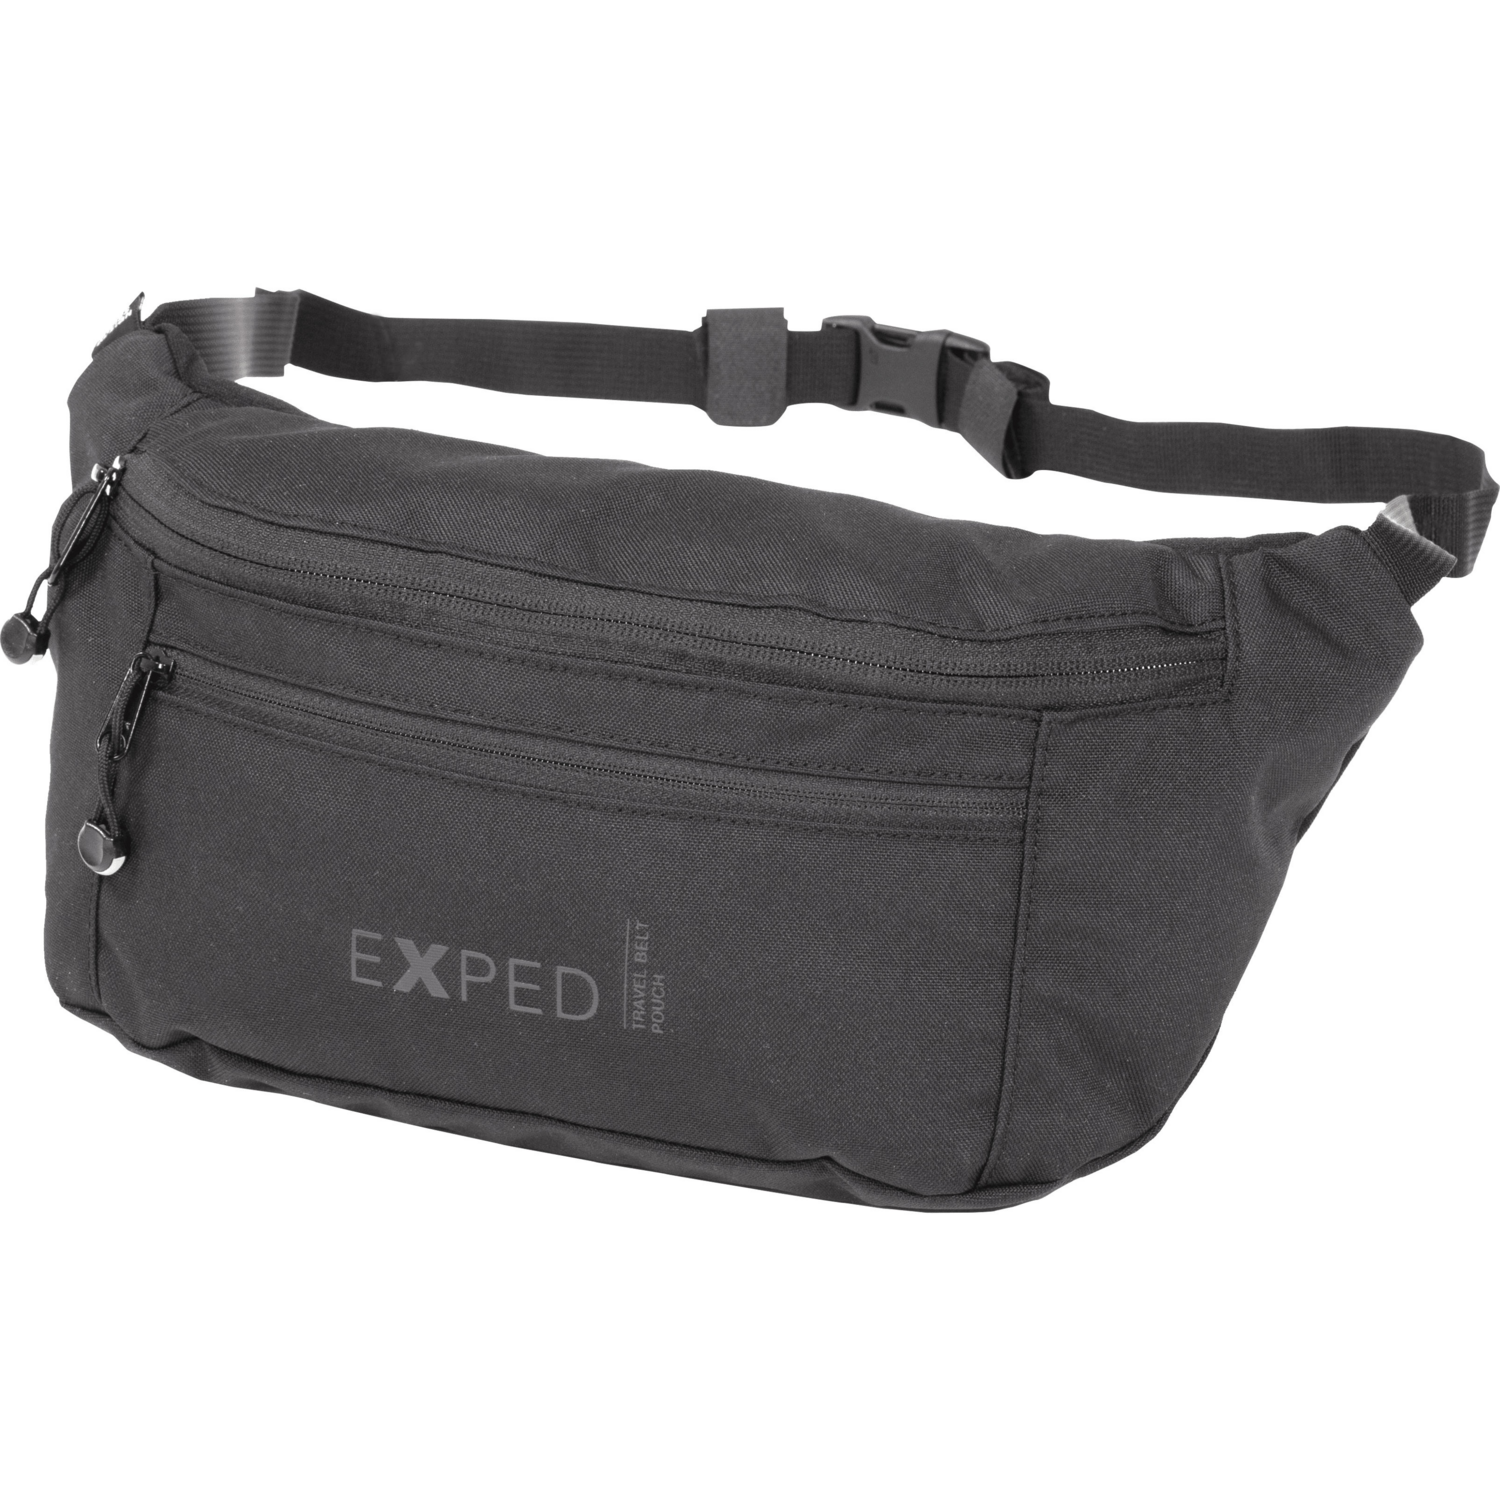 Поясная сумка Exped Travel Belt Pouch black - черныйфото